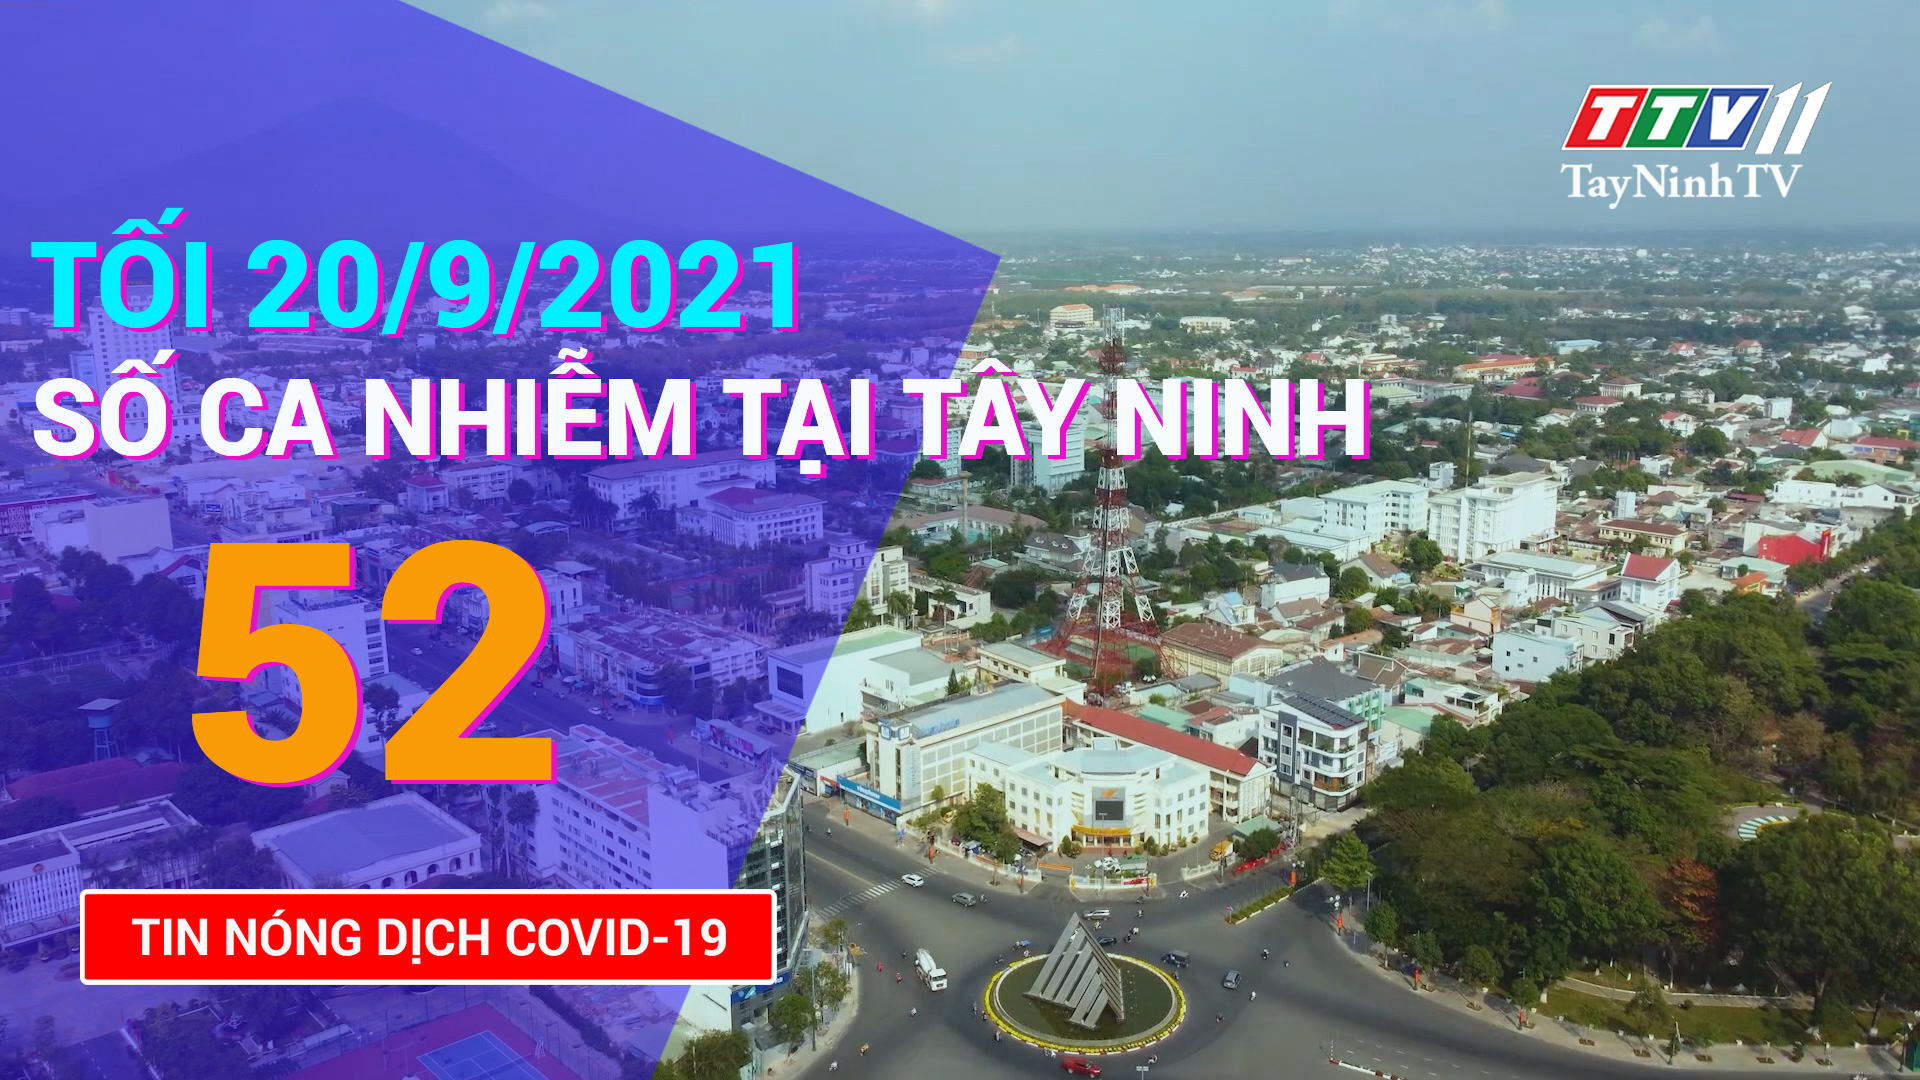 Tin tức Covid-19 tối 20/9/2021 | TayNinhTV